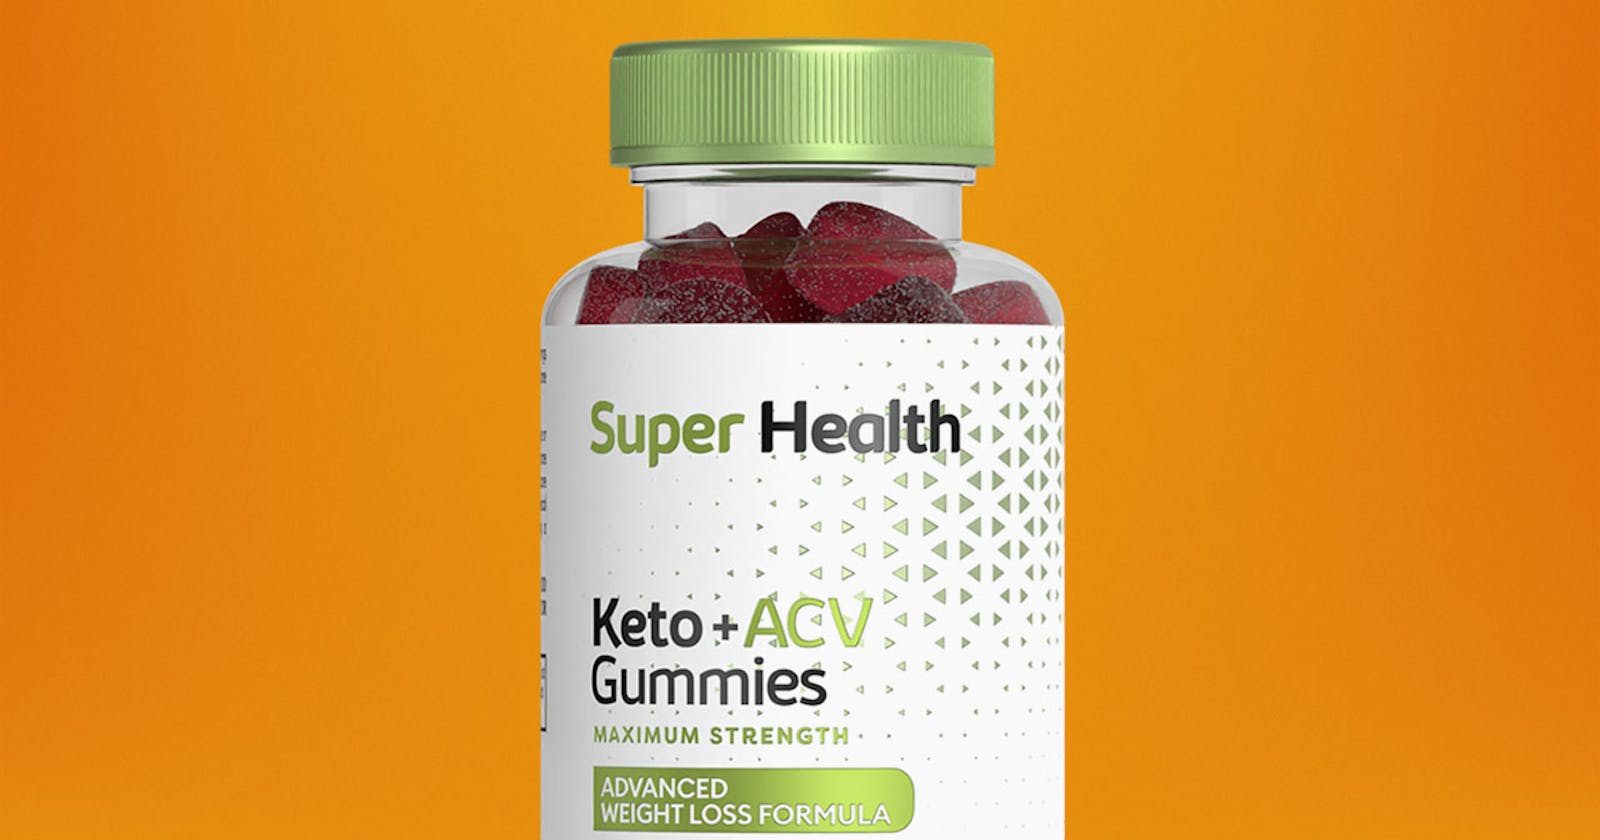 Super Health Keto Gummies Price, Reviews, Ingredients & Side Effects